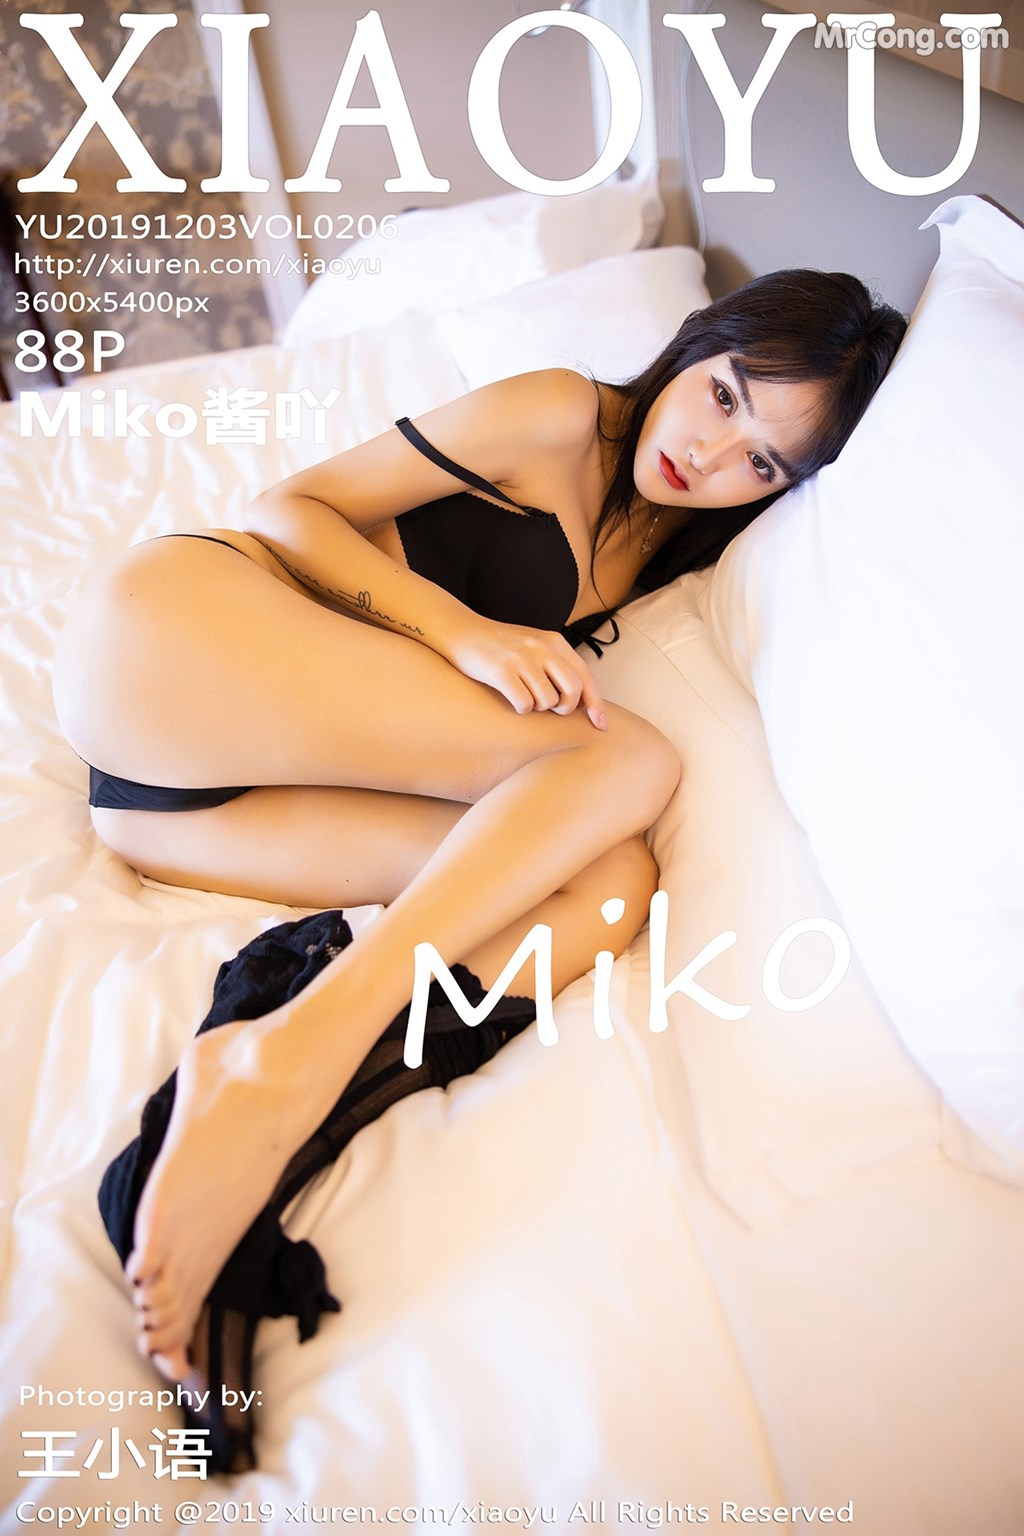 XiaoYu Vol. 2006: Miko 酱 吖 (89 photos)